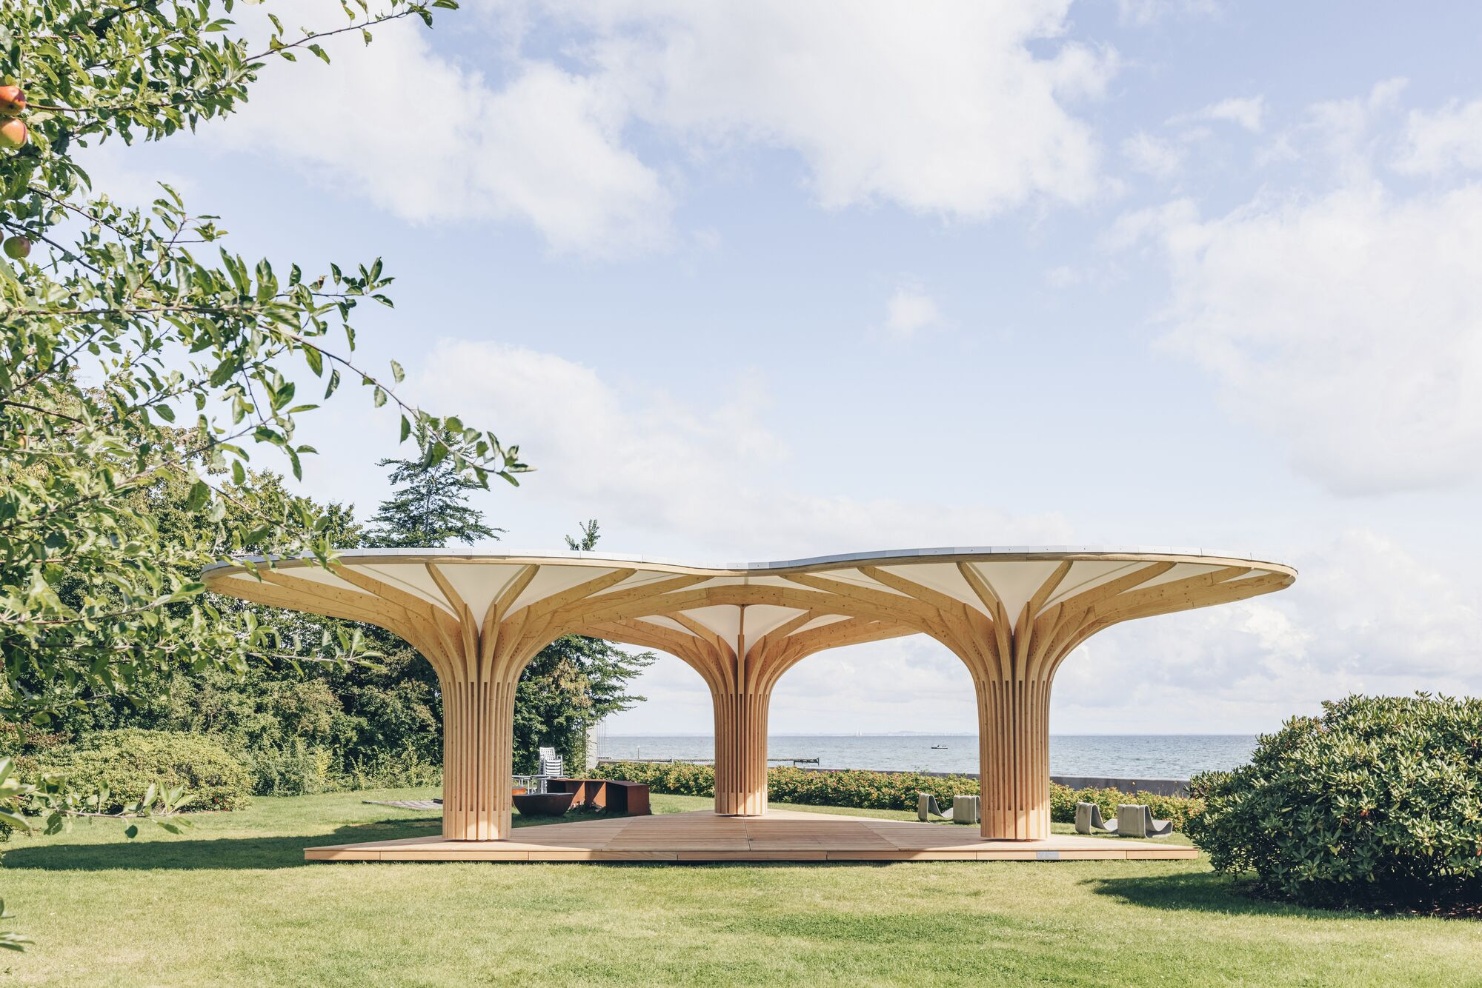 3 holzstrukturen mit membrandach bilden den pavillon „into the woods“